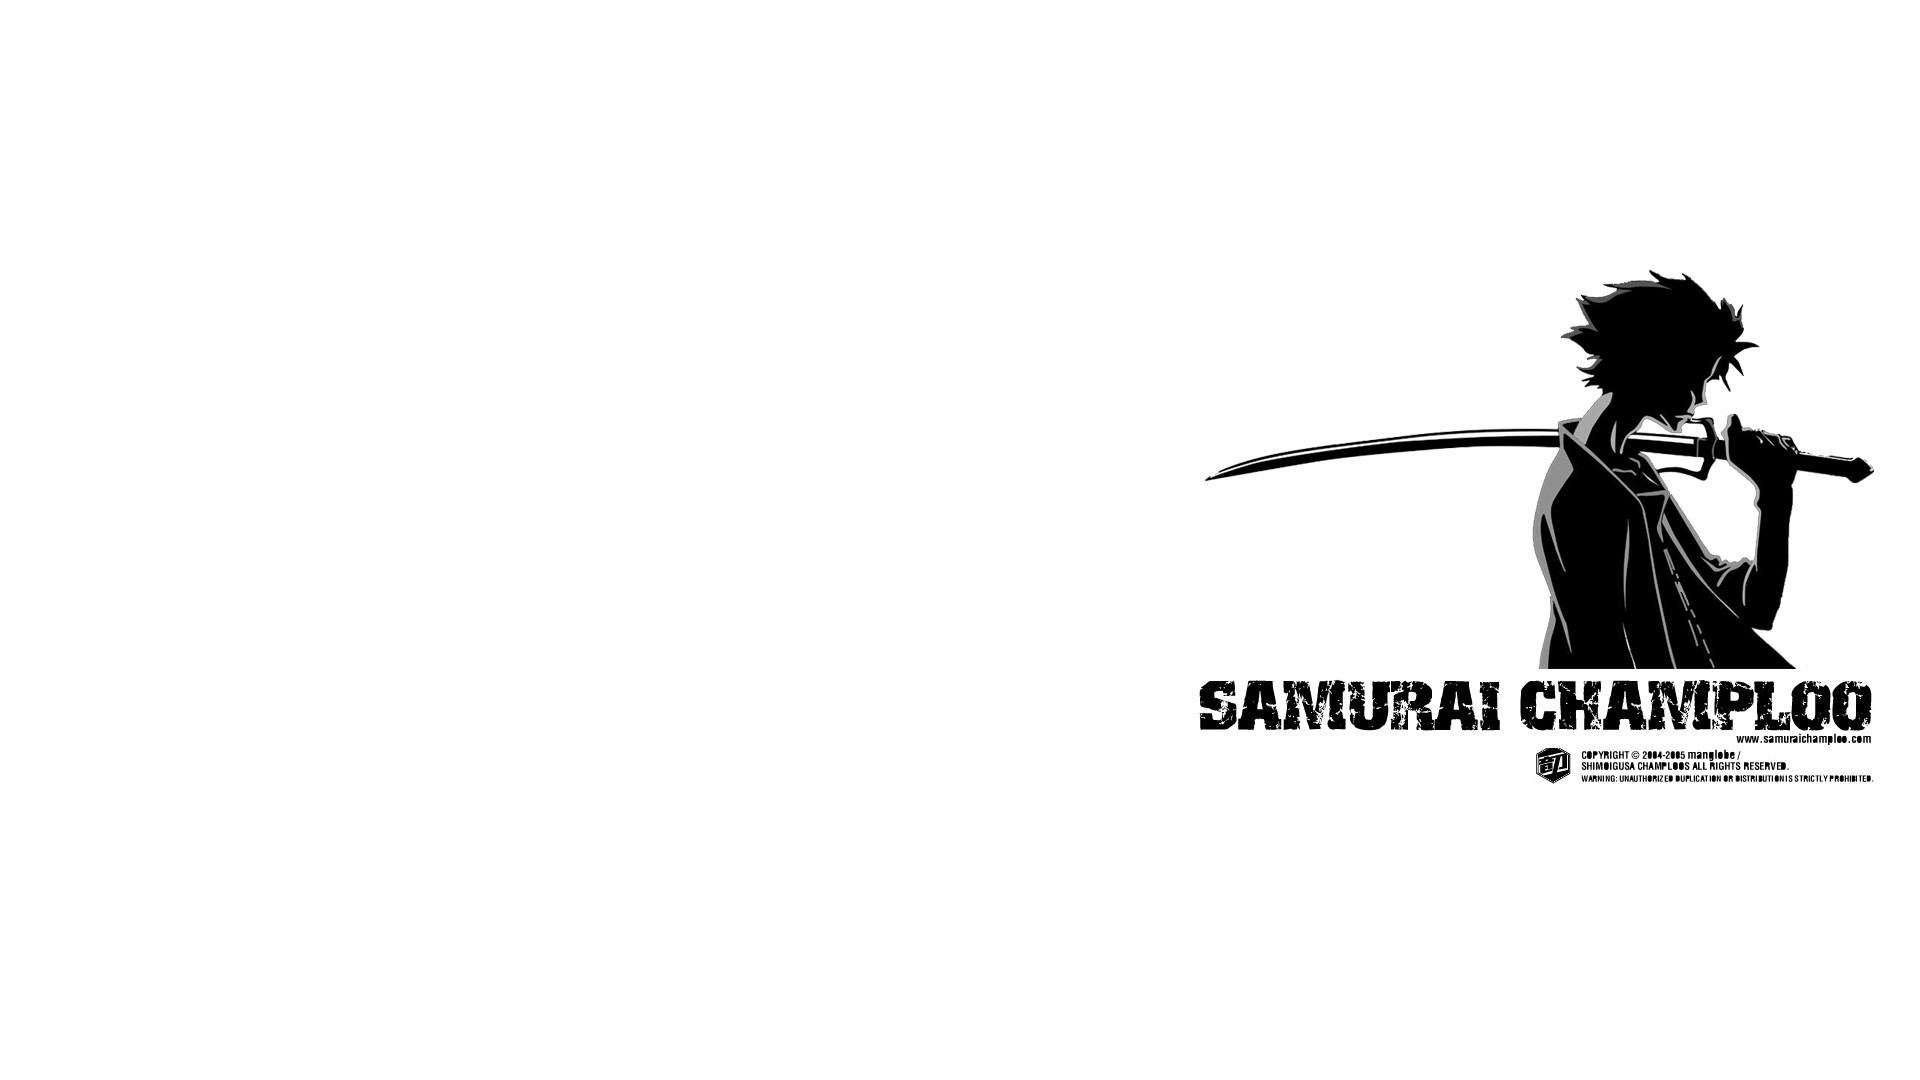 You are downloading Samurai Champloo wallpaper 7. download wallpaper